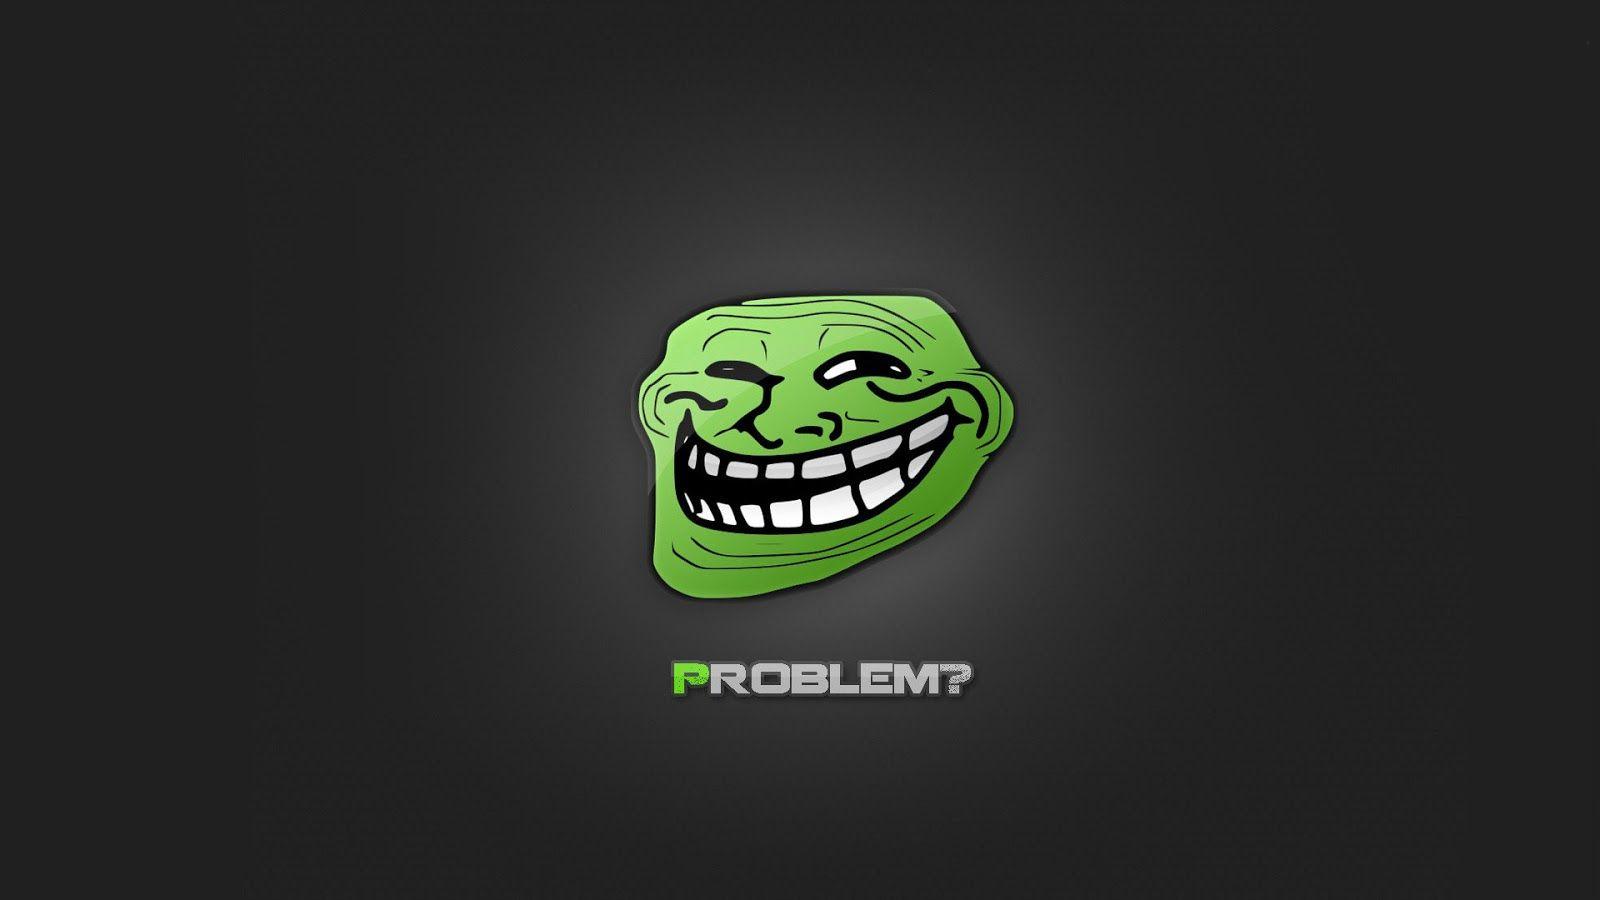 Troll Face Problem? Logo a8 HD Wallpaper